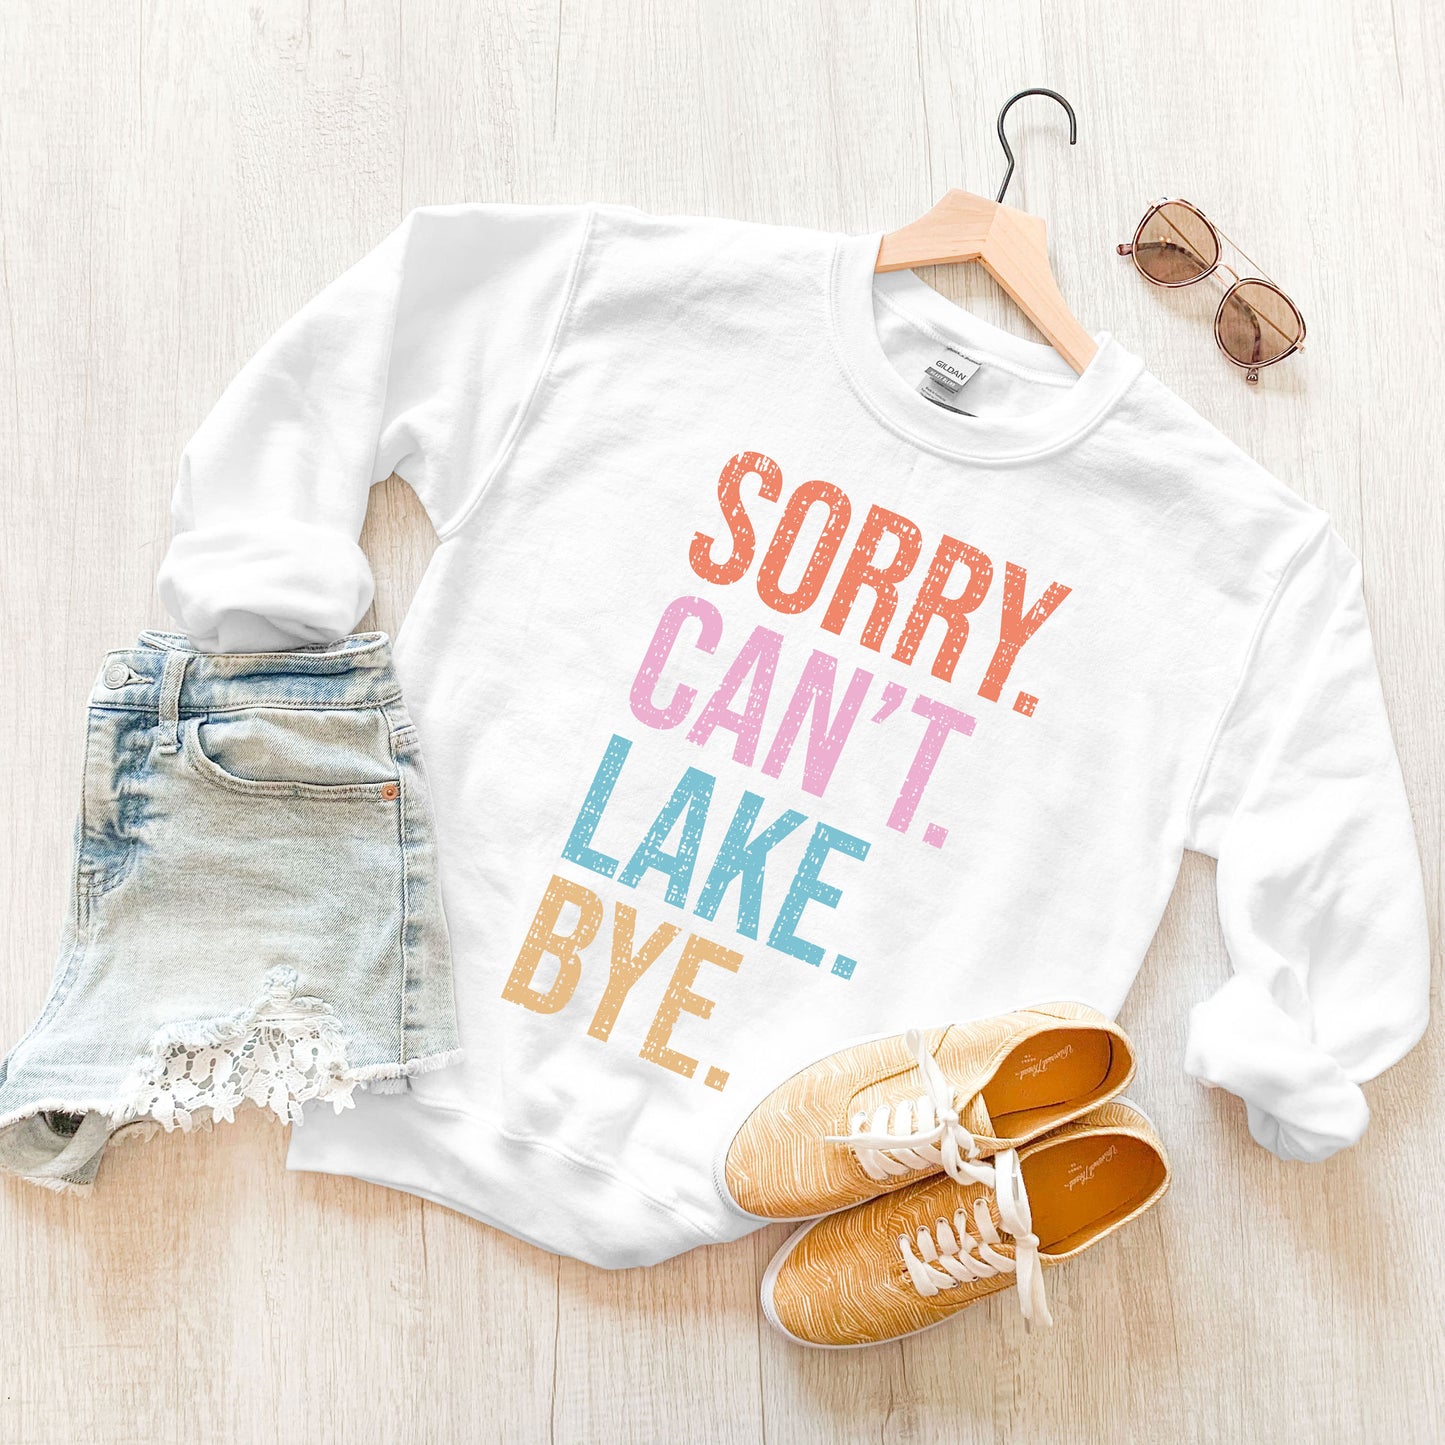 Sorry. Can't. Lake.  | Sweatshirt